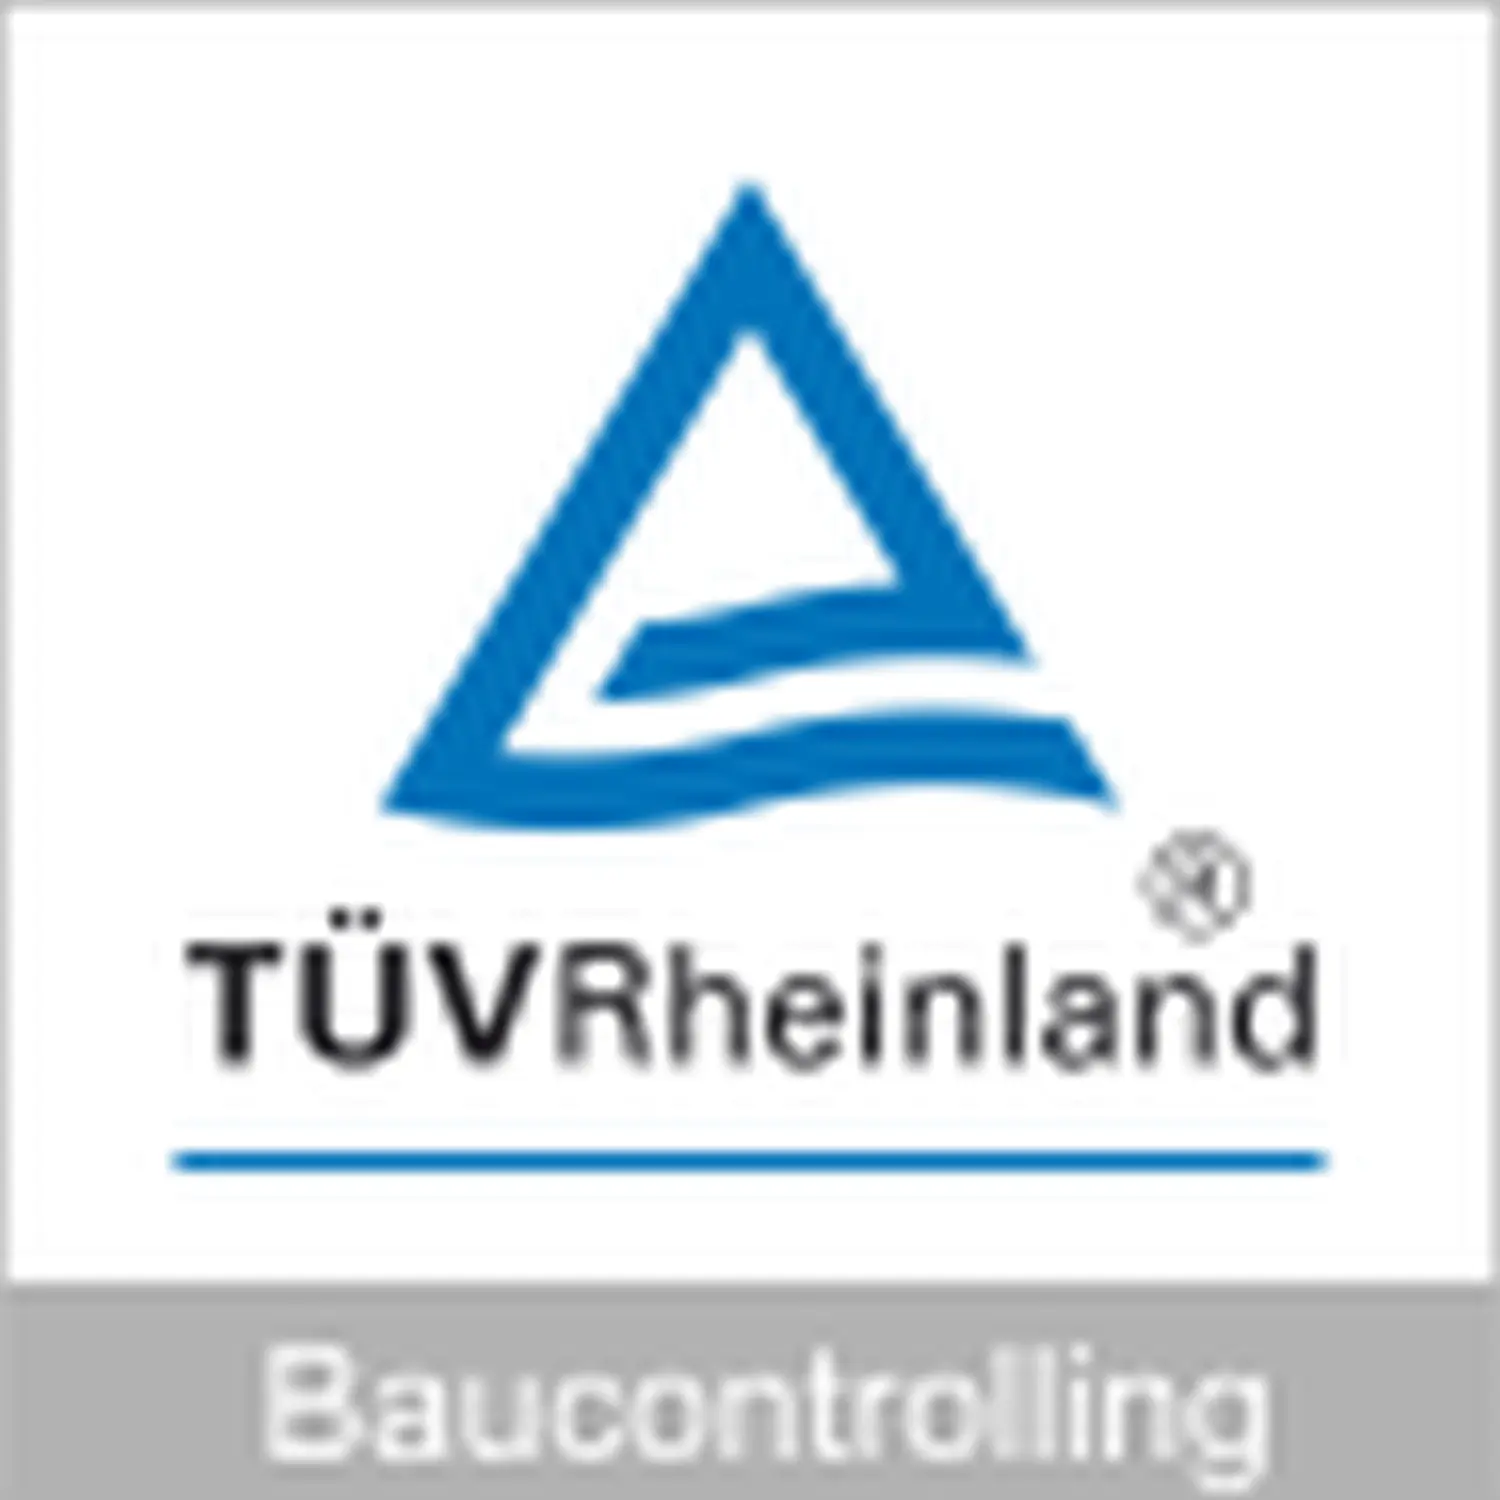 tuevrheinland logo